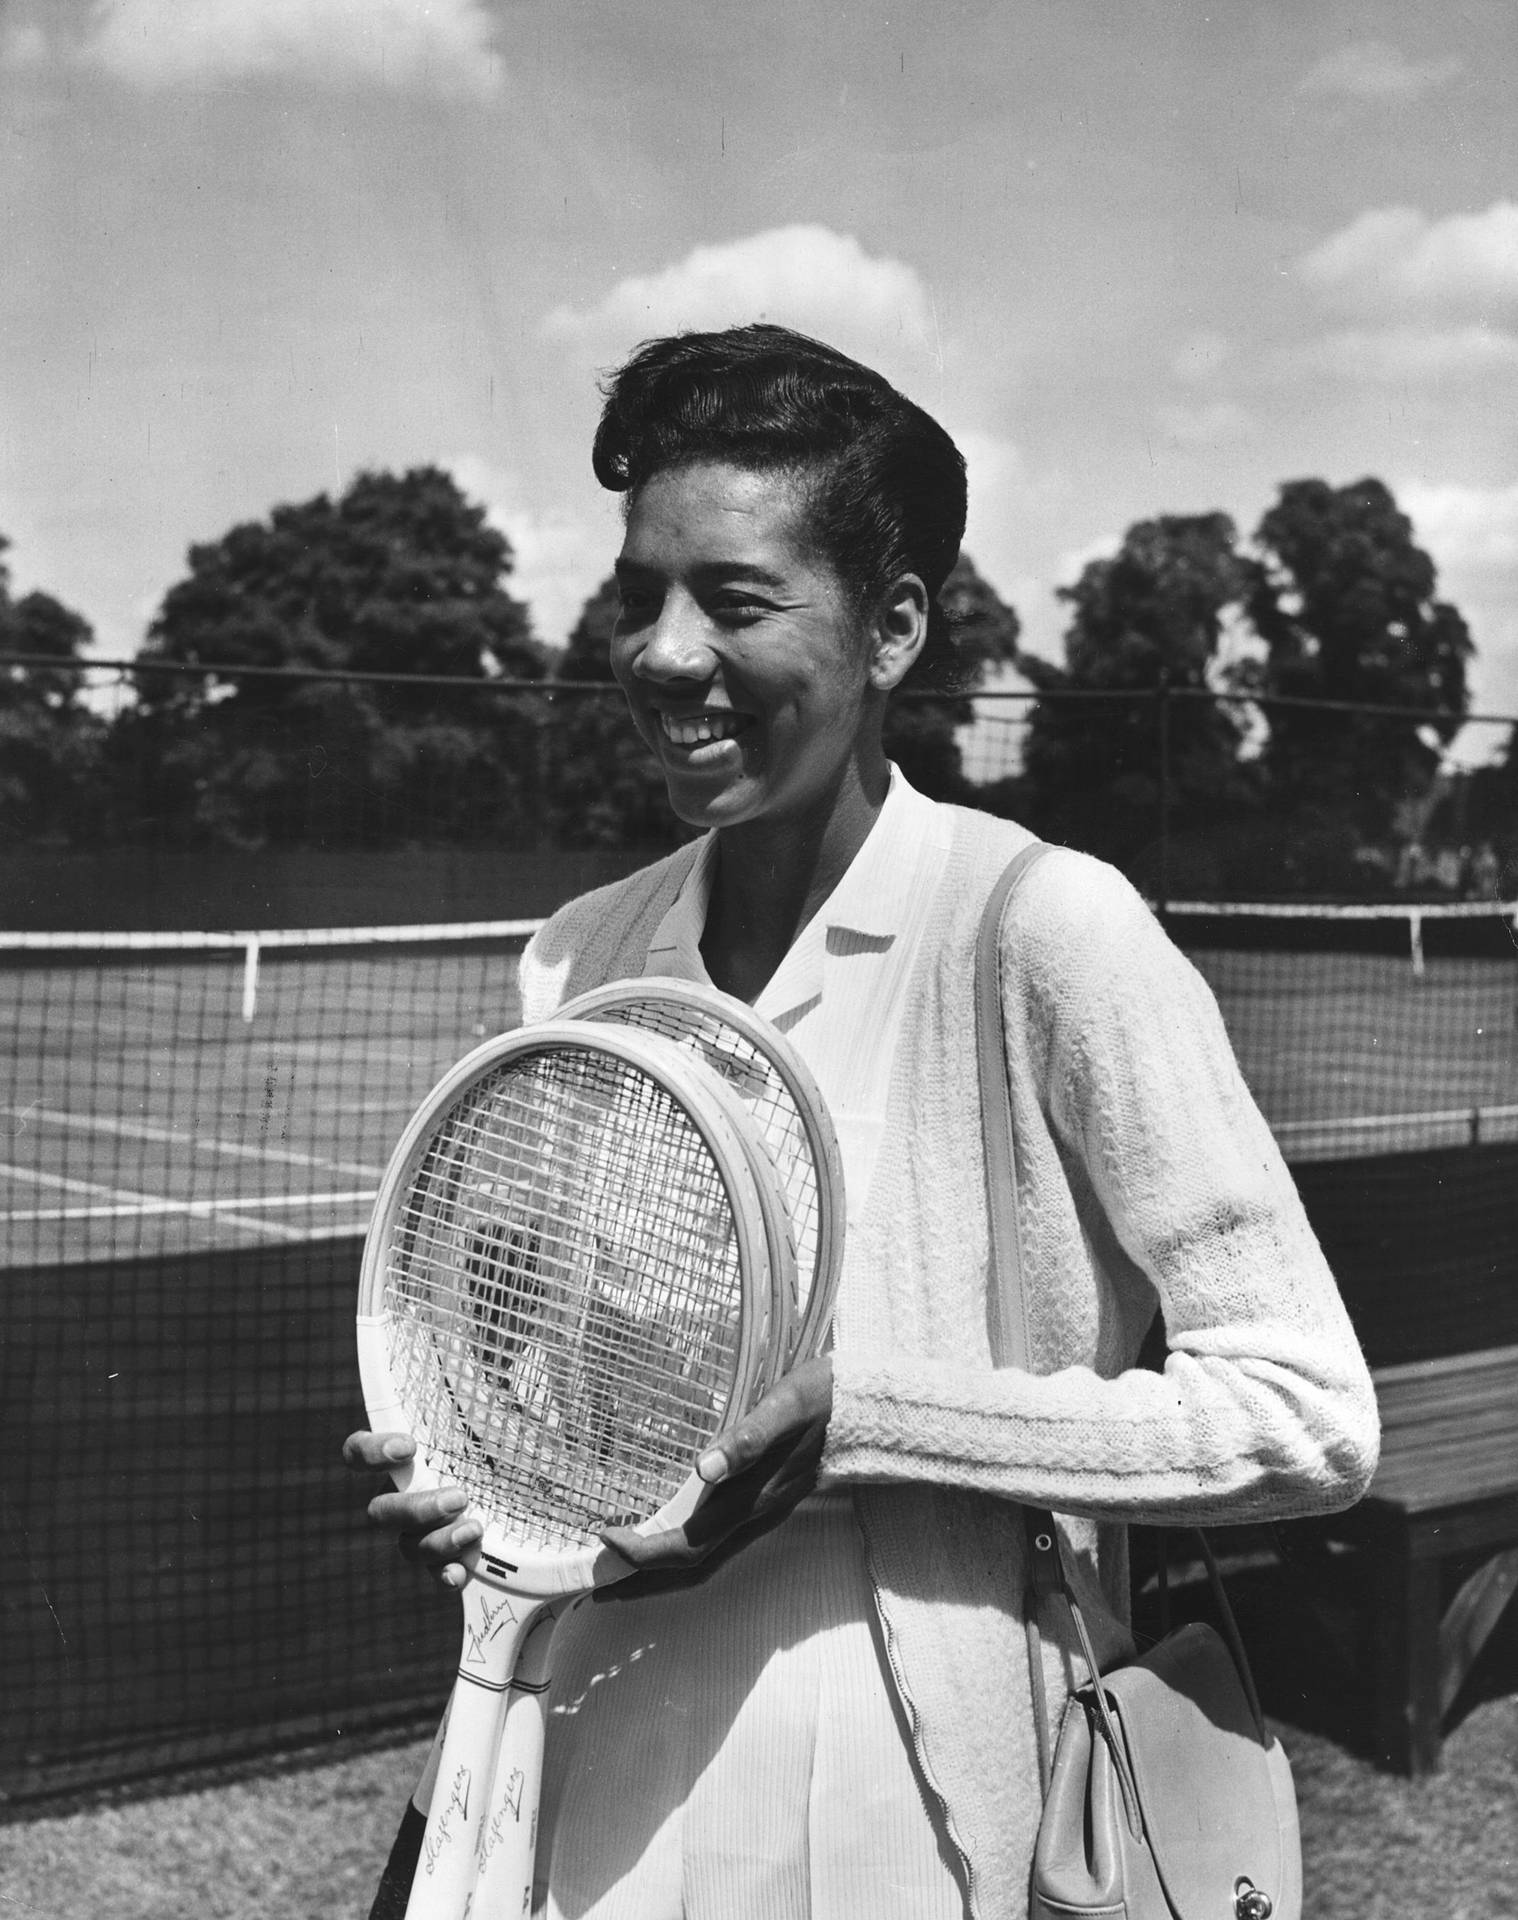 Caption: Althea Gibson Triumphantly Holding a Tennis Racket Wallpaper